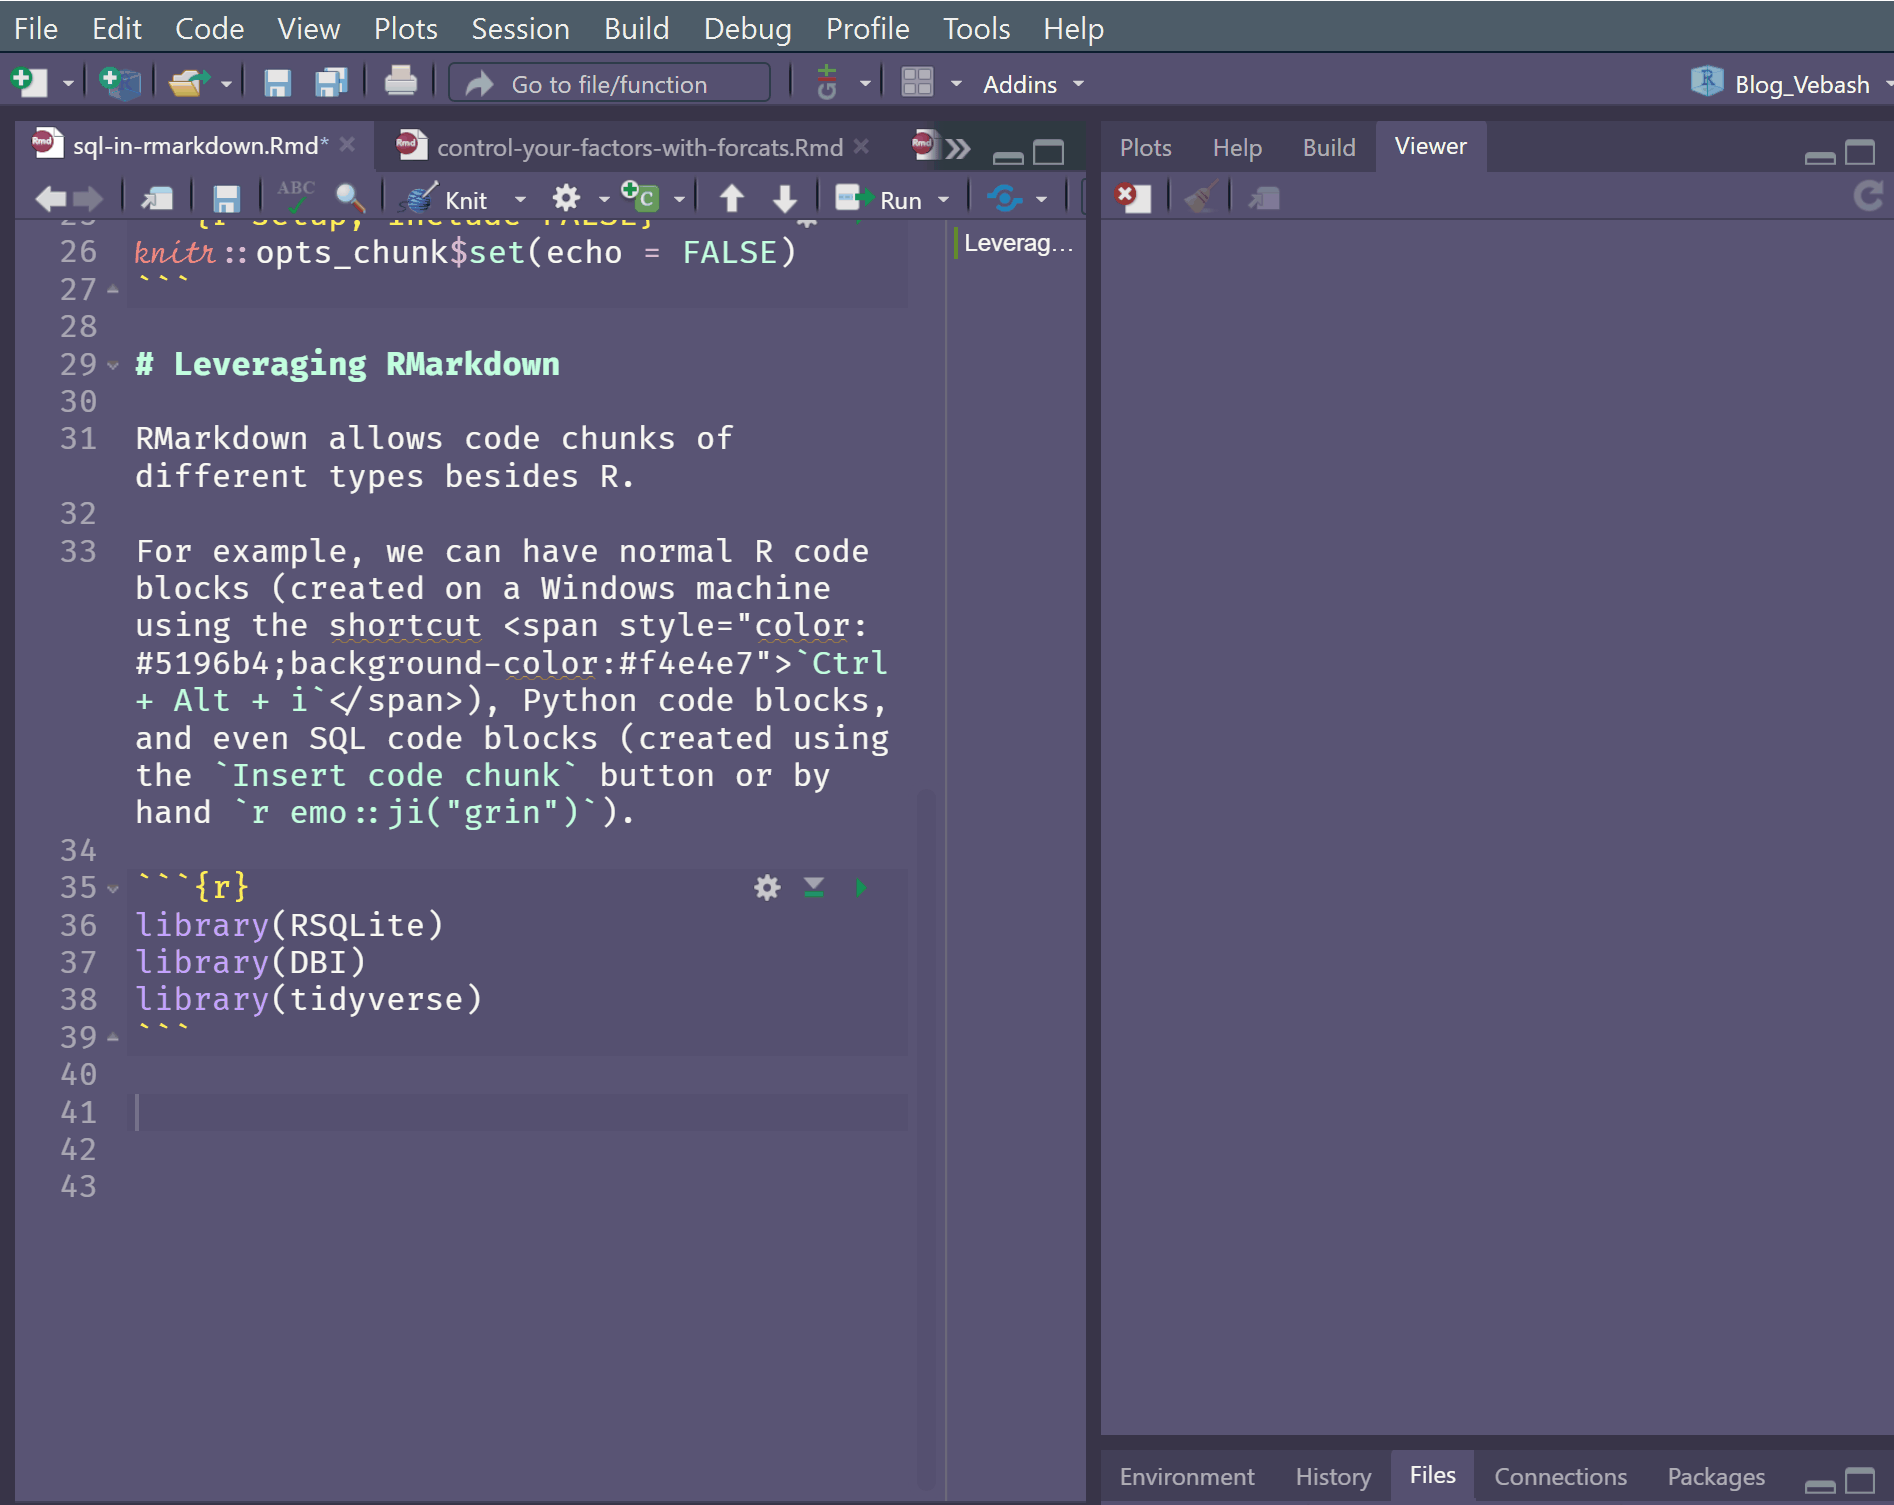 GIF of how to add code chunks in RMarkdown